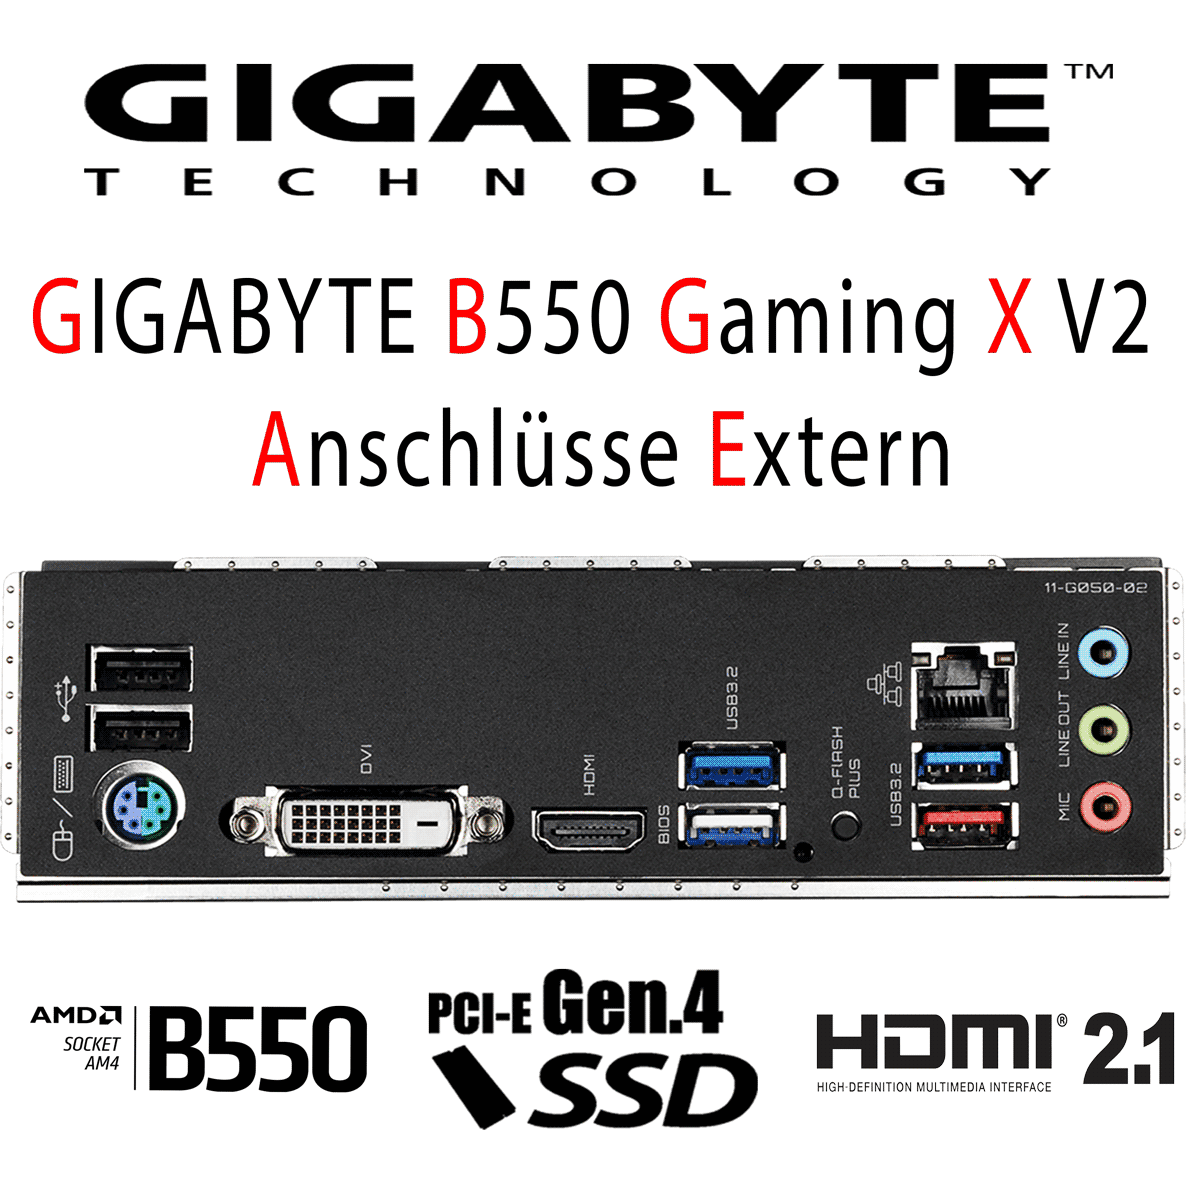 PC Bundle • AMD Ryzen 5 5600X • GIGABYTE B550 Gaming X V2 • 16GB DDR4-3200 Ram